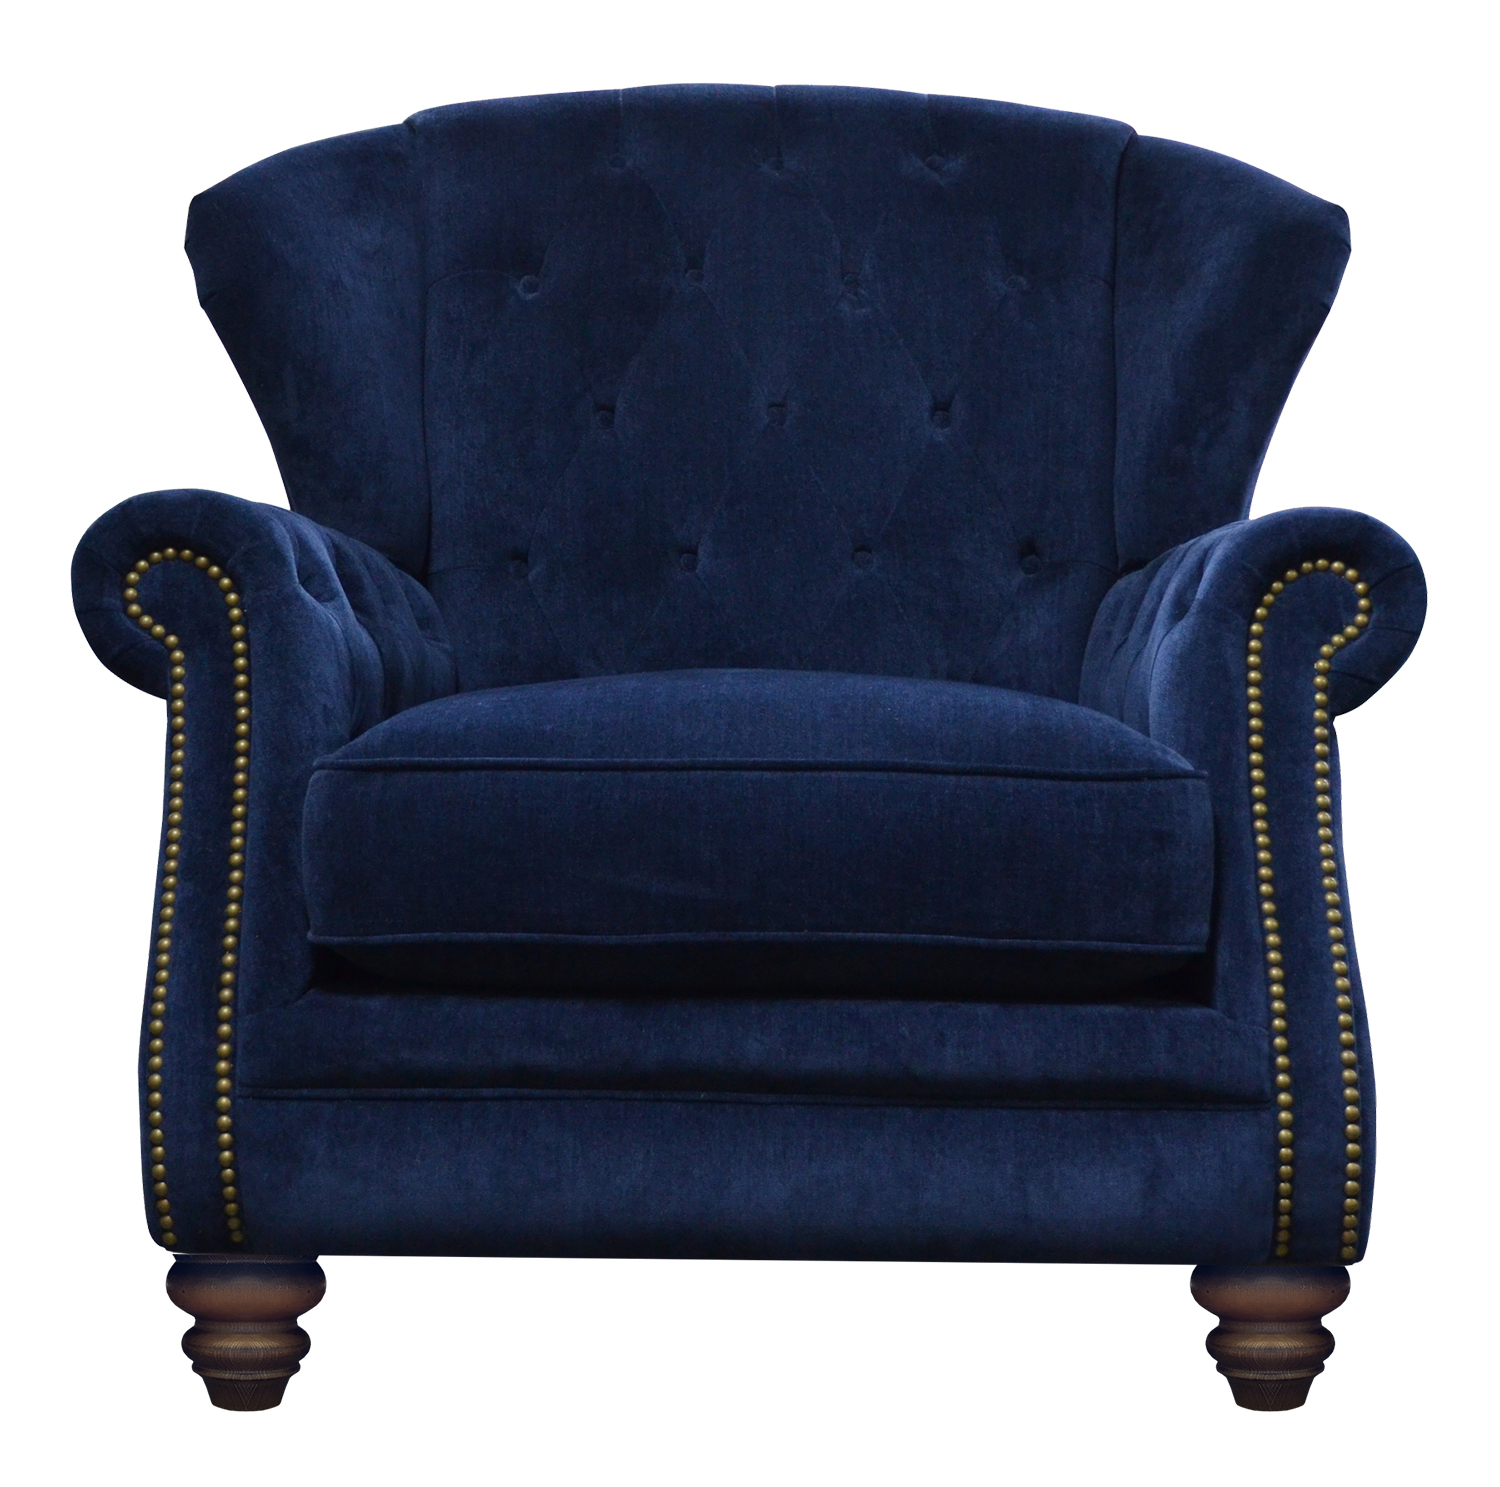 Alexander & James Nola Wing Chair in Oasis Navy Fabric